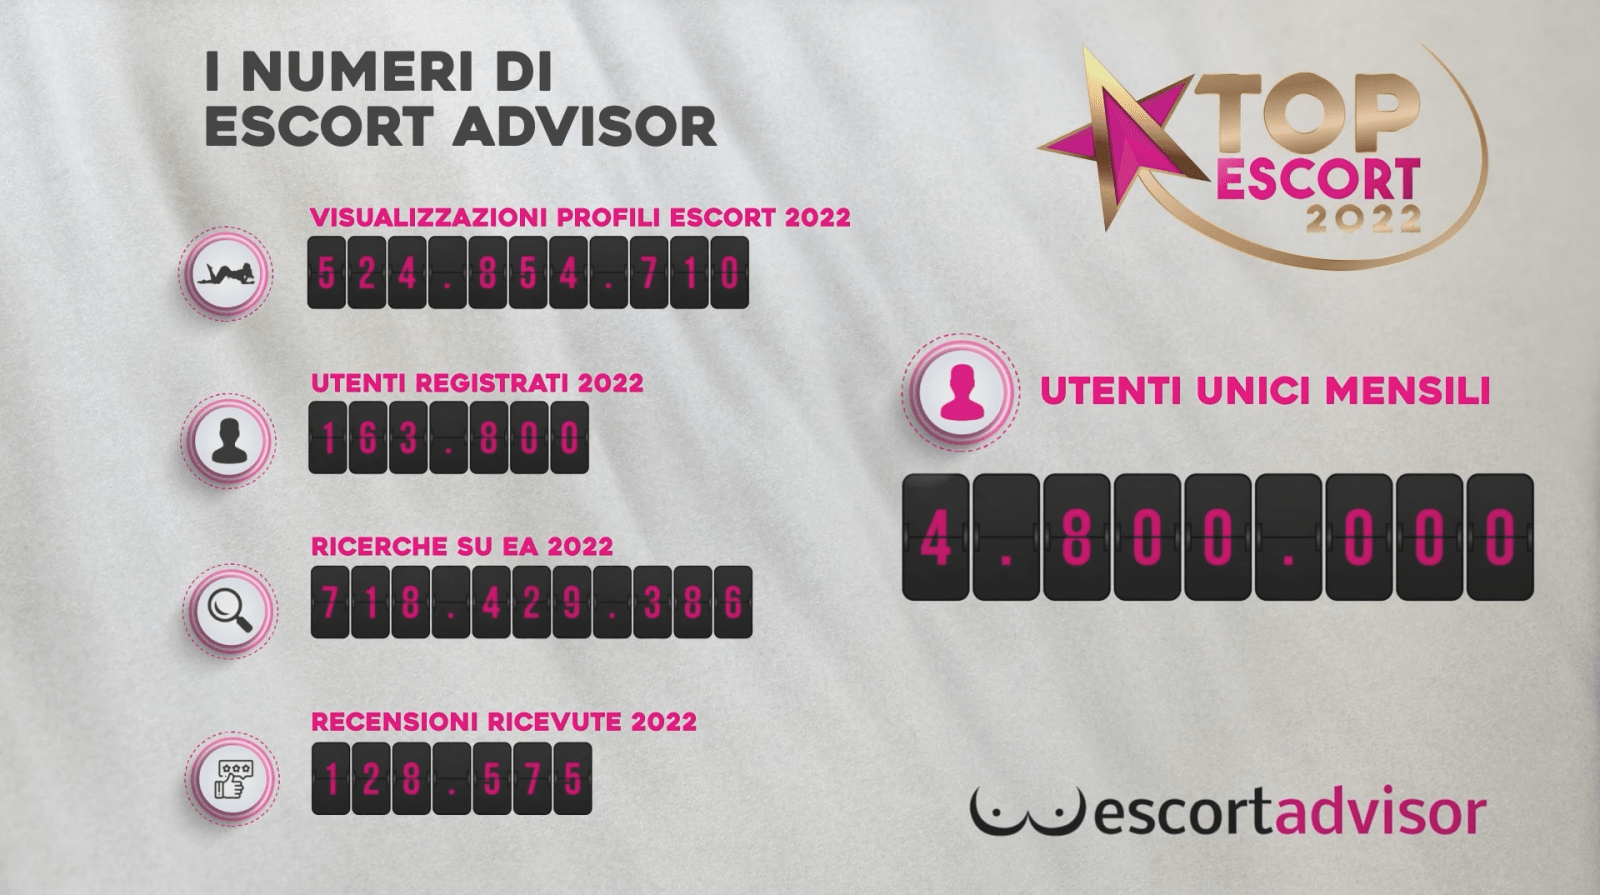 Escort Advisor: the ranking of the best escorts in Italy 2022